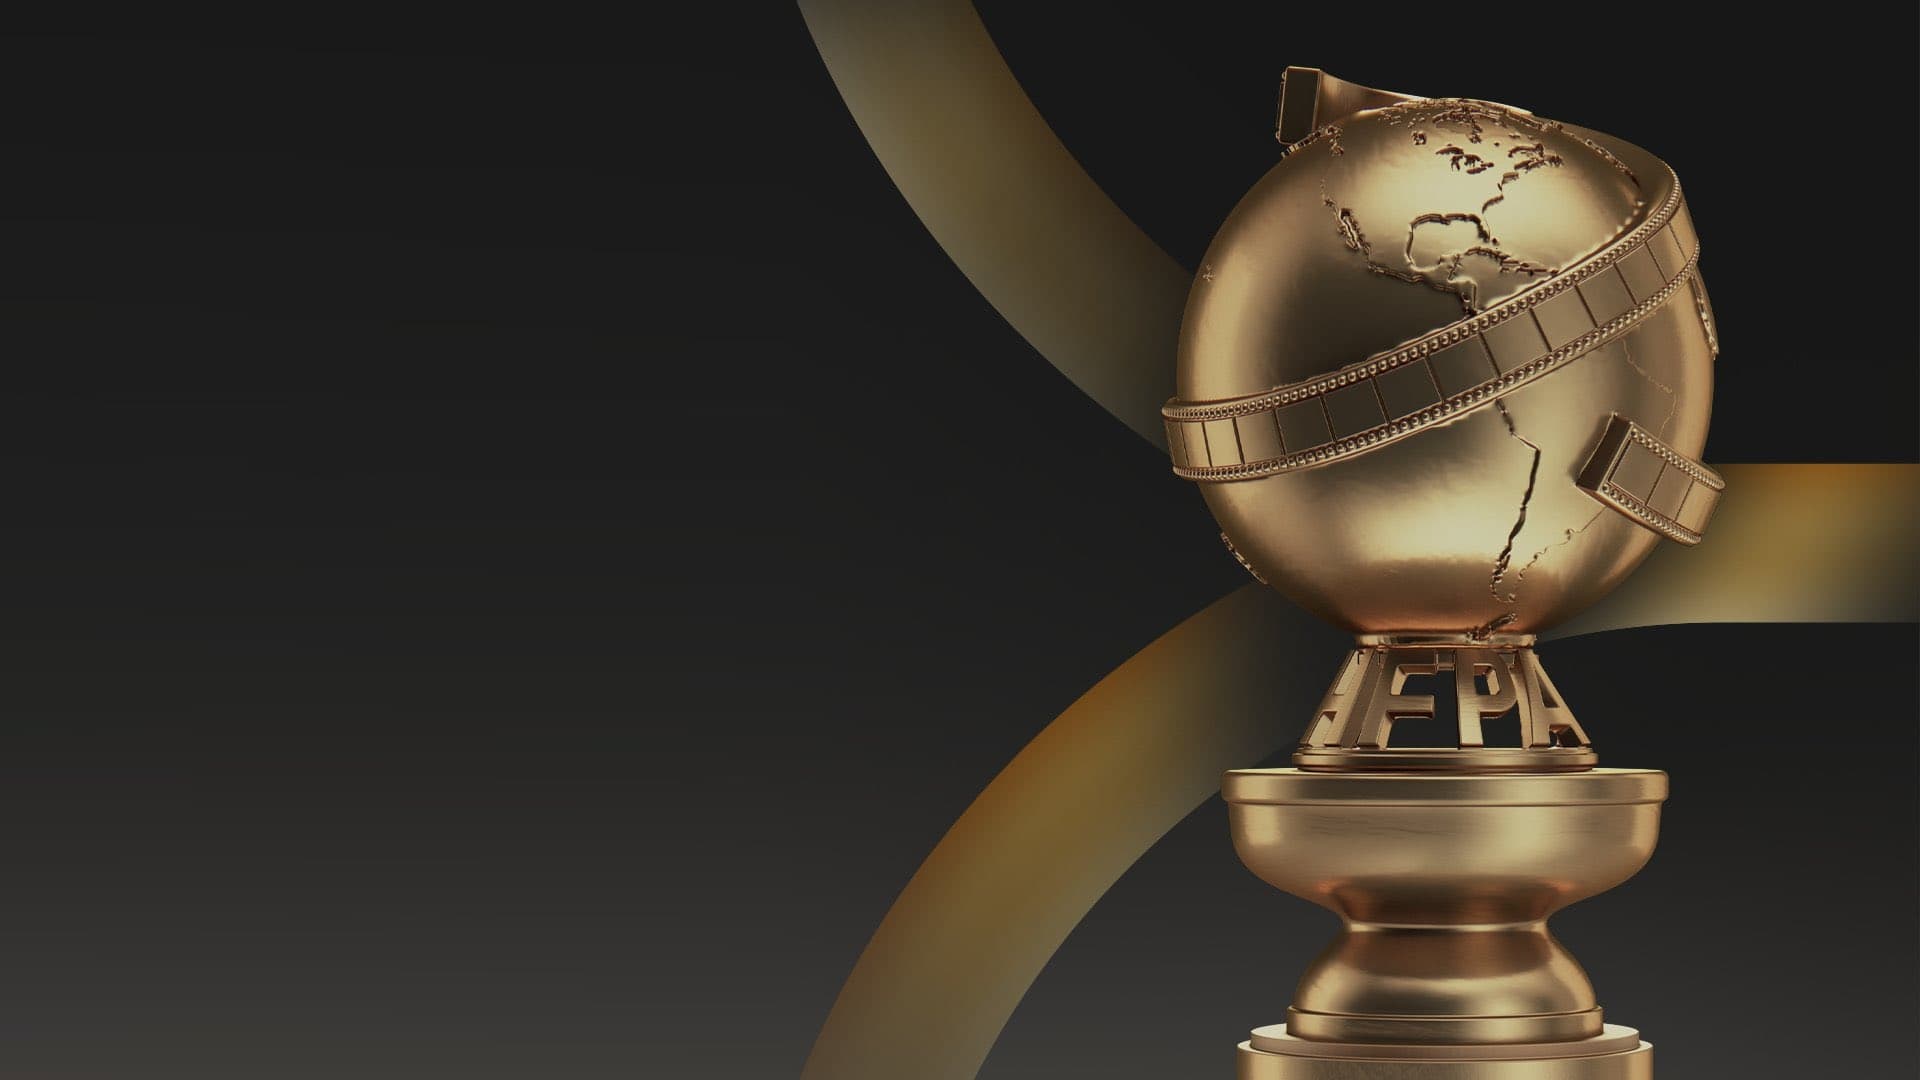 The 21st Annual Golden Globe Awards